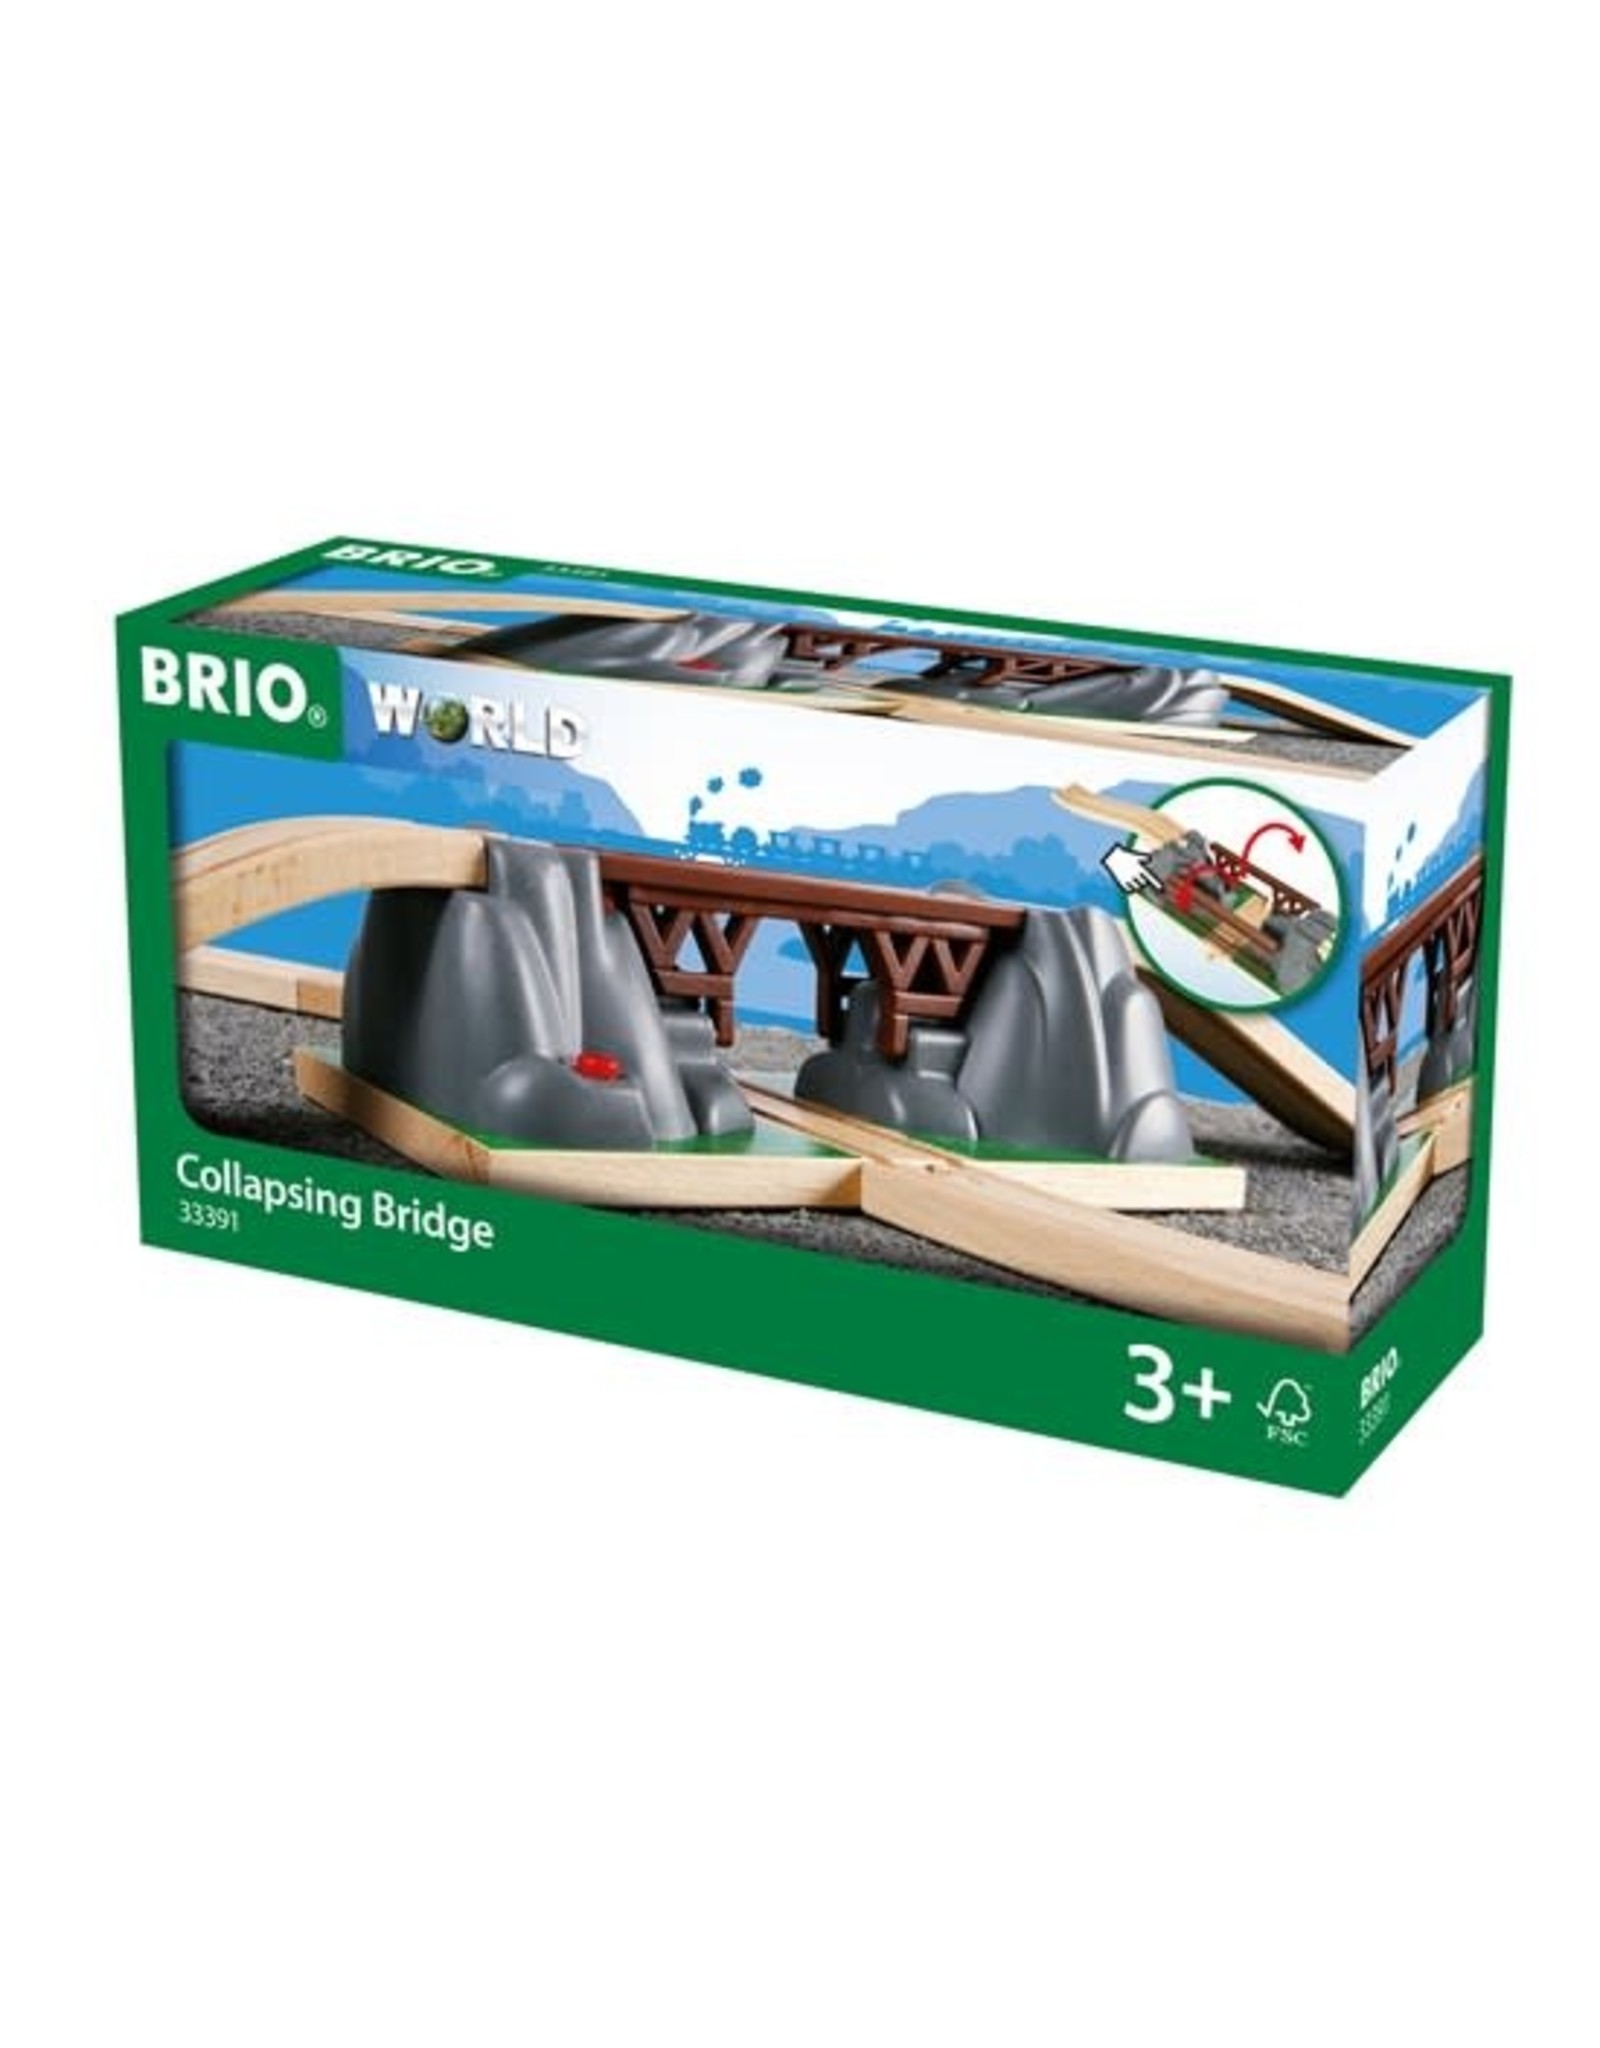 Brio Brio World 33391 Instortende Brug - Collapsing Bridge